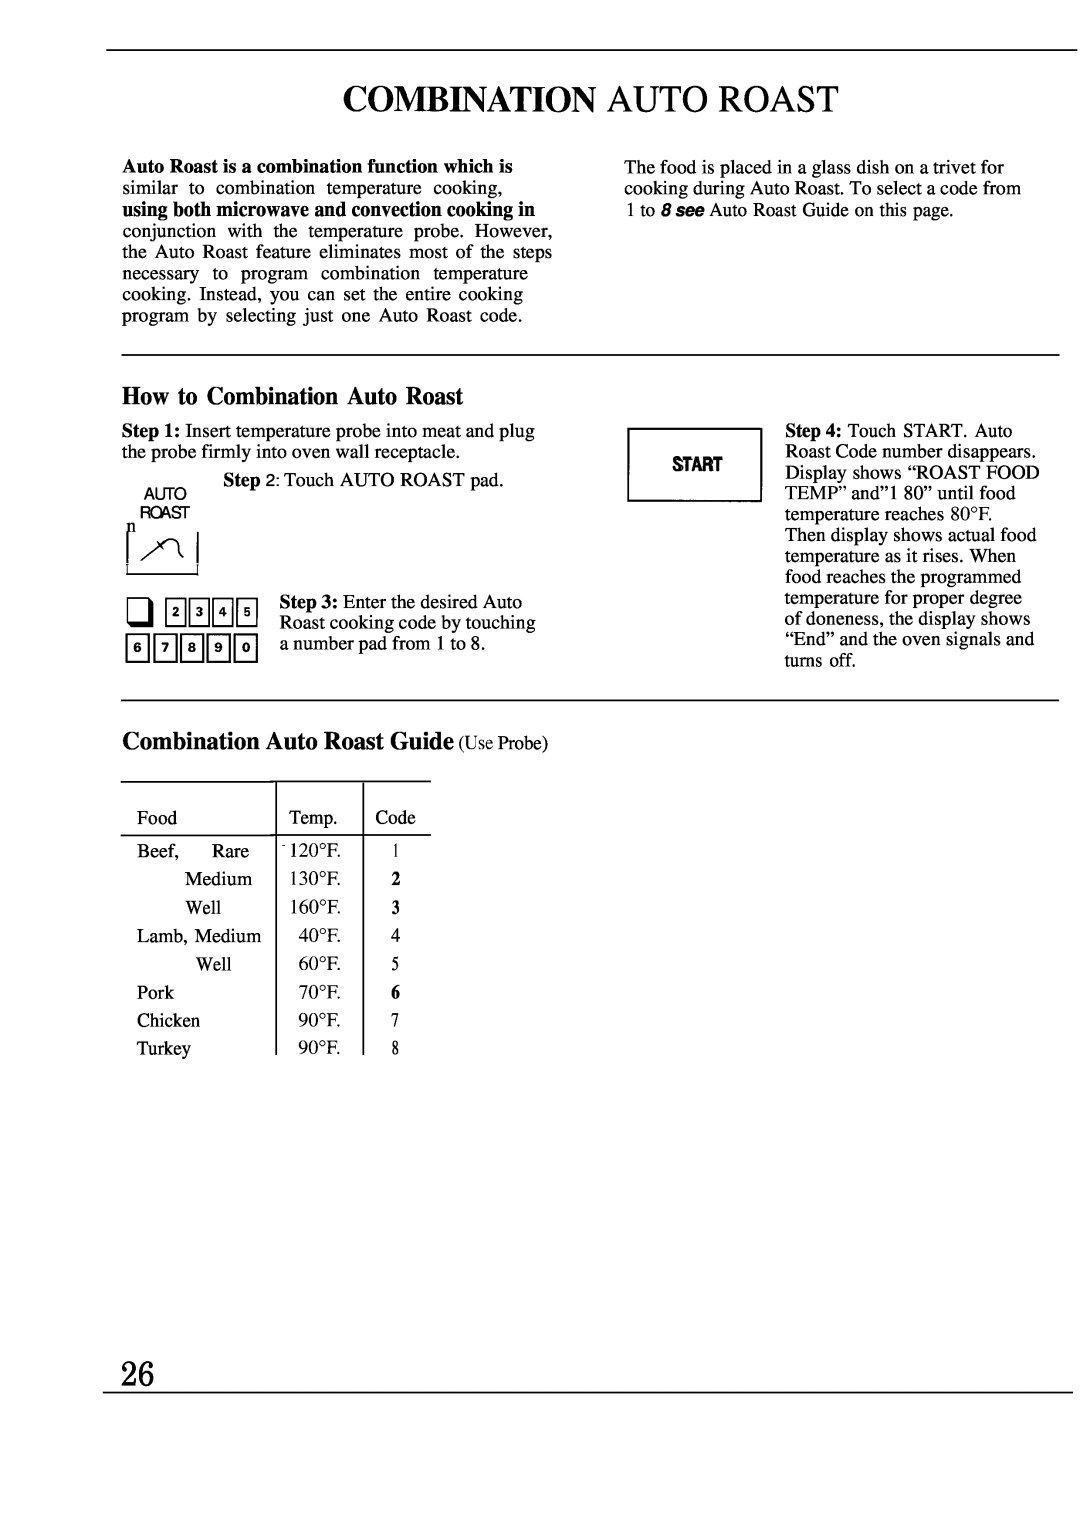 GE Monogram JET343G manual Comb~Ation Auto Roast, How to Combination Auto Roast, Combination Auto Roast Guide Use Probe 